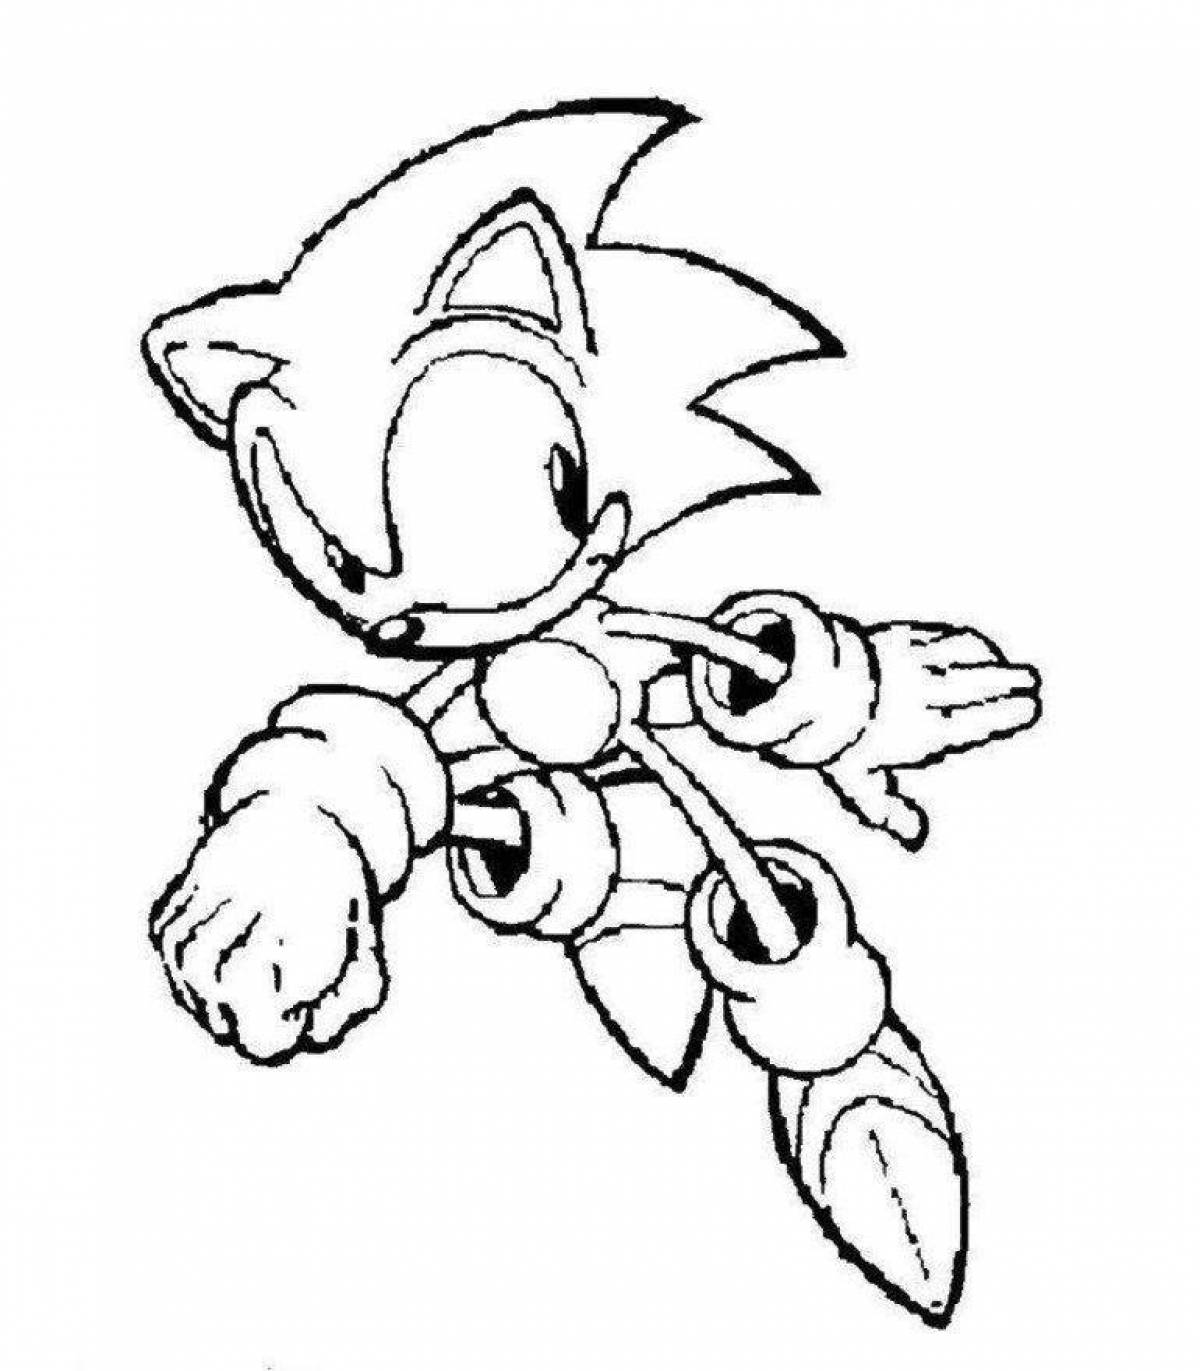 Sonic the Hedgehog раскраска